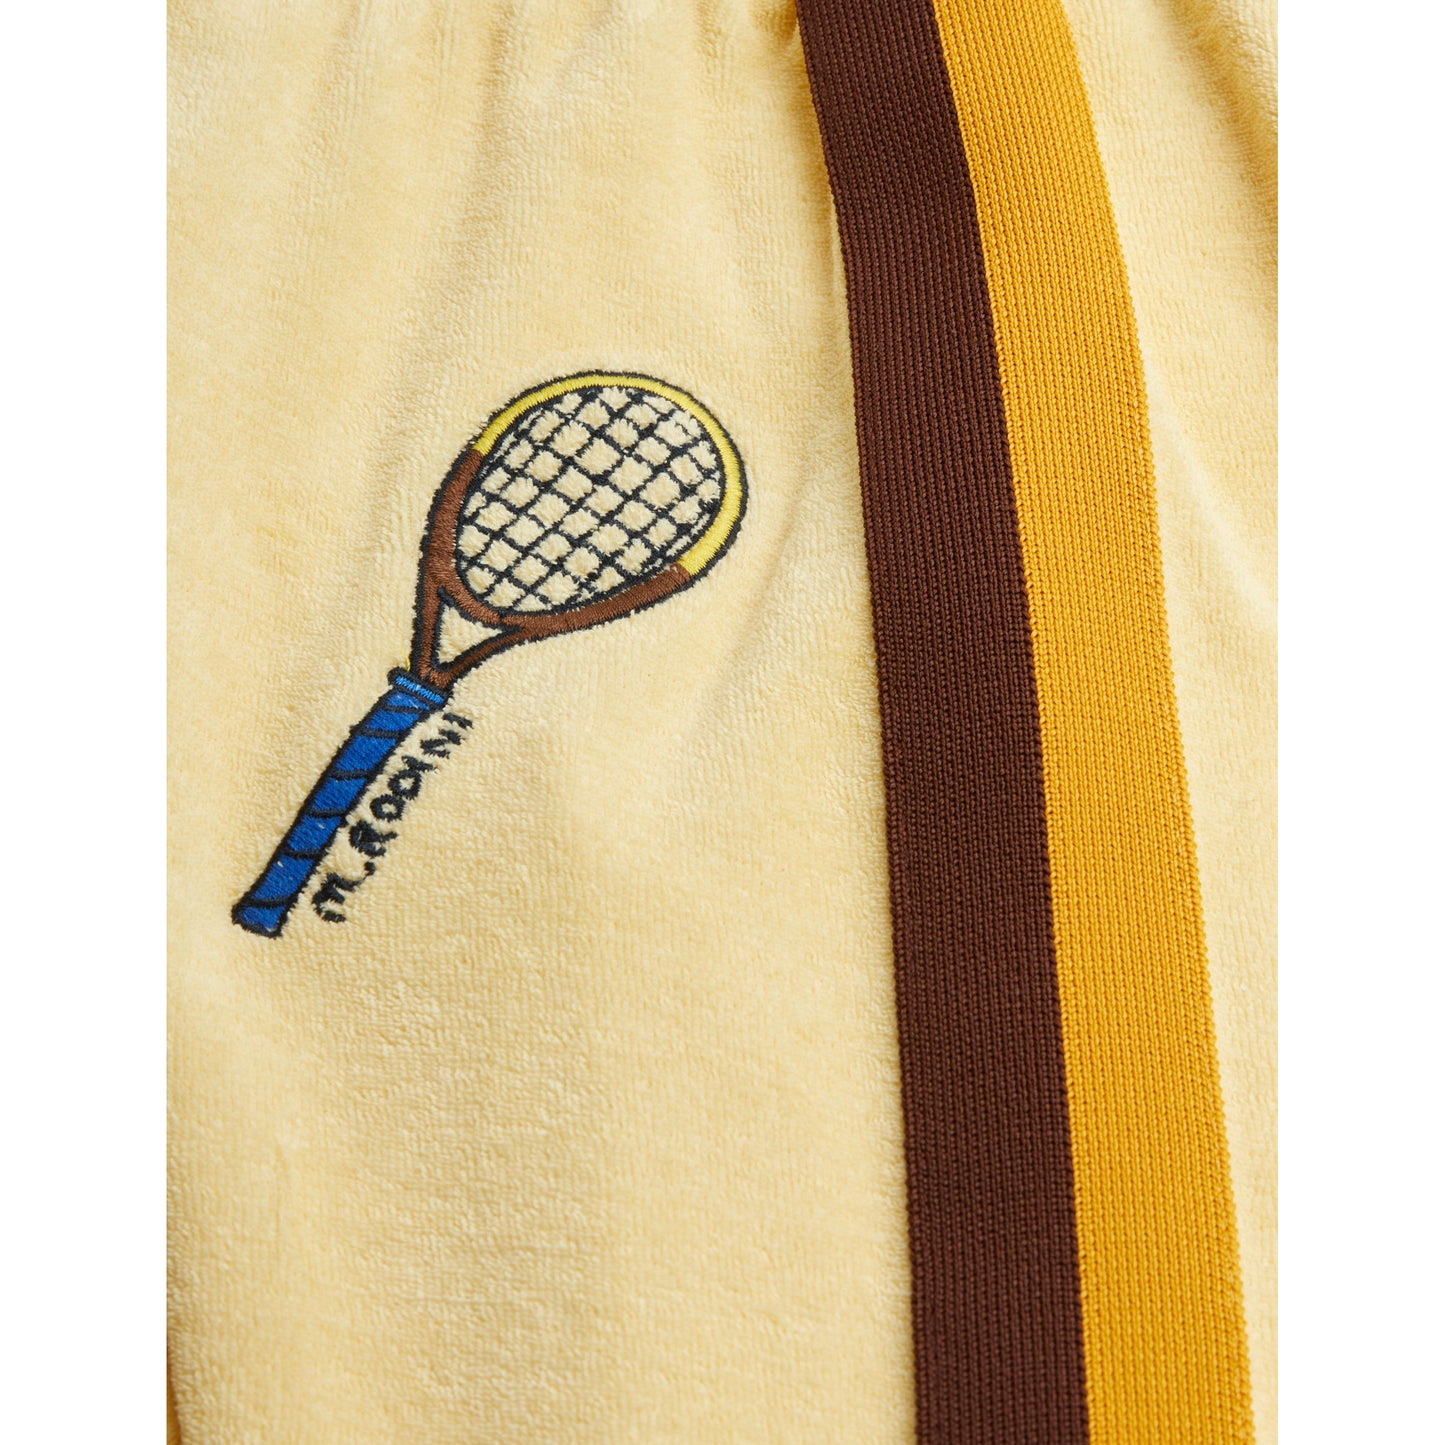 MINI RODINI Tennis Embroidered Trousers ALWAYS SHOW